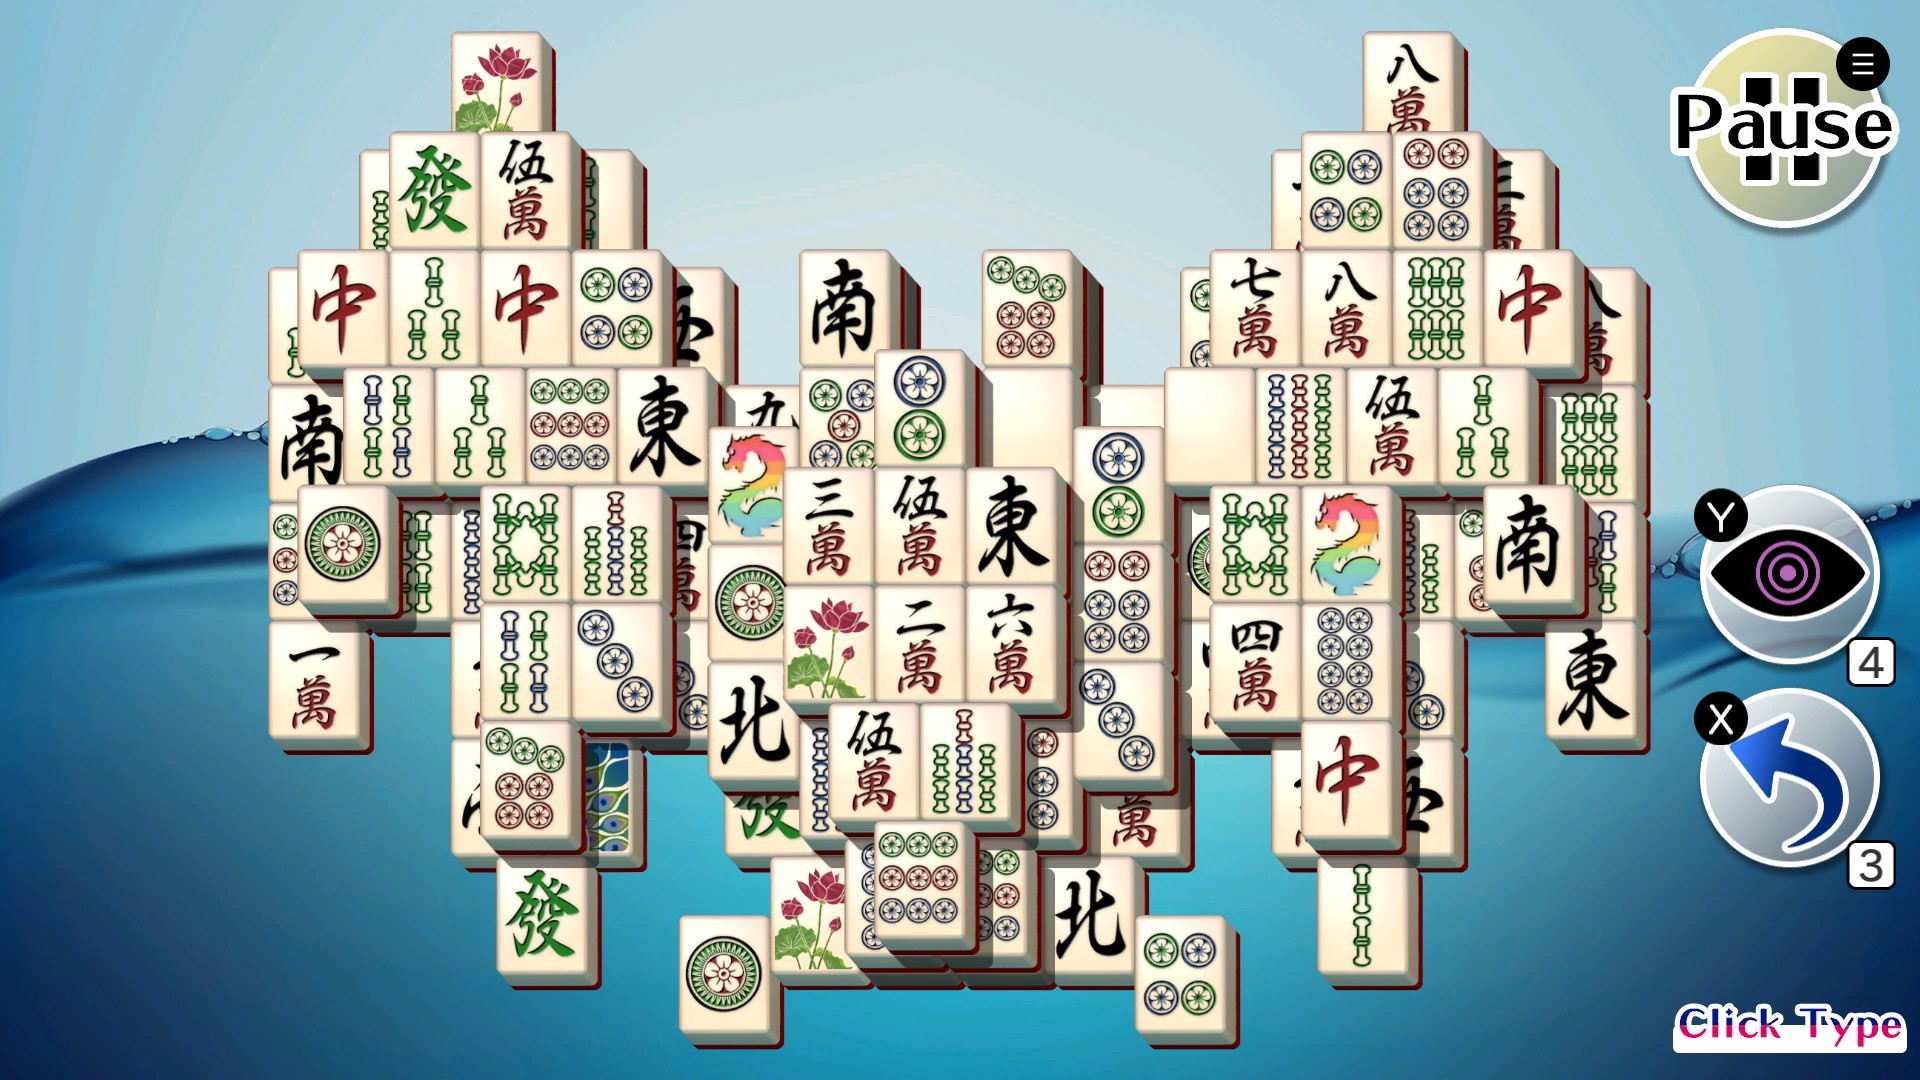 Download Mahjong Titans Game on Windows 10